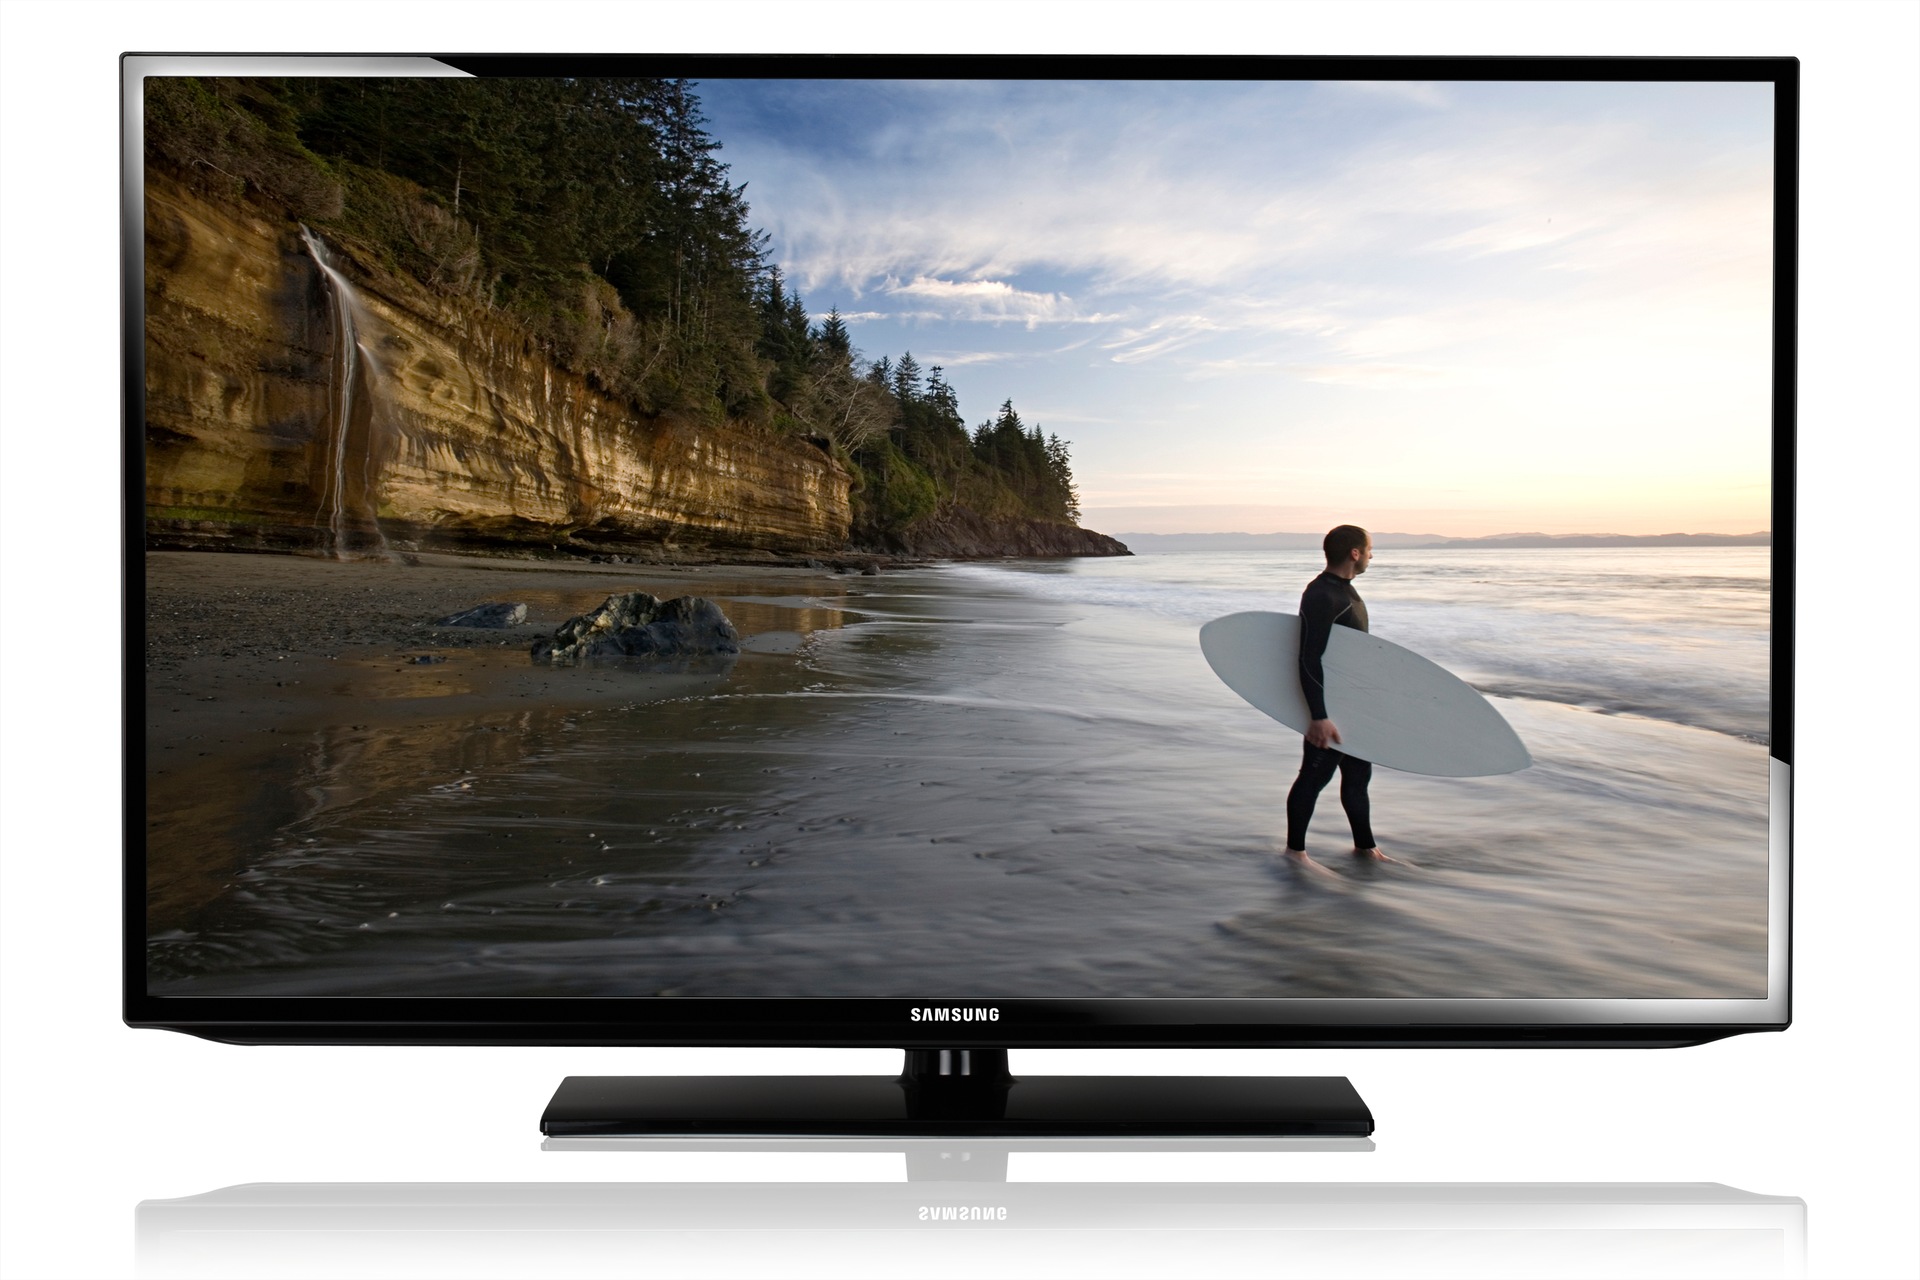 Samsung 40 Full HD 1080P Smart LED TV - UN40H5203 